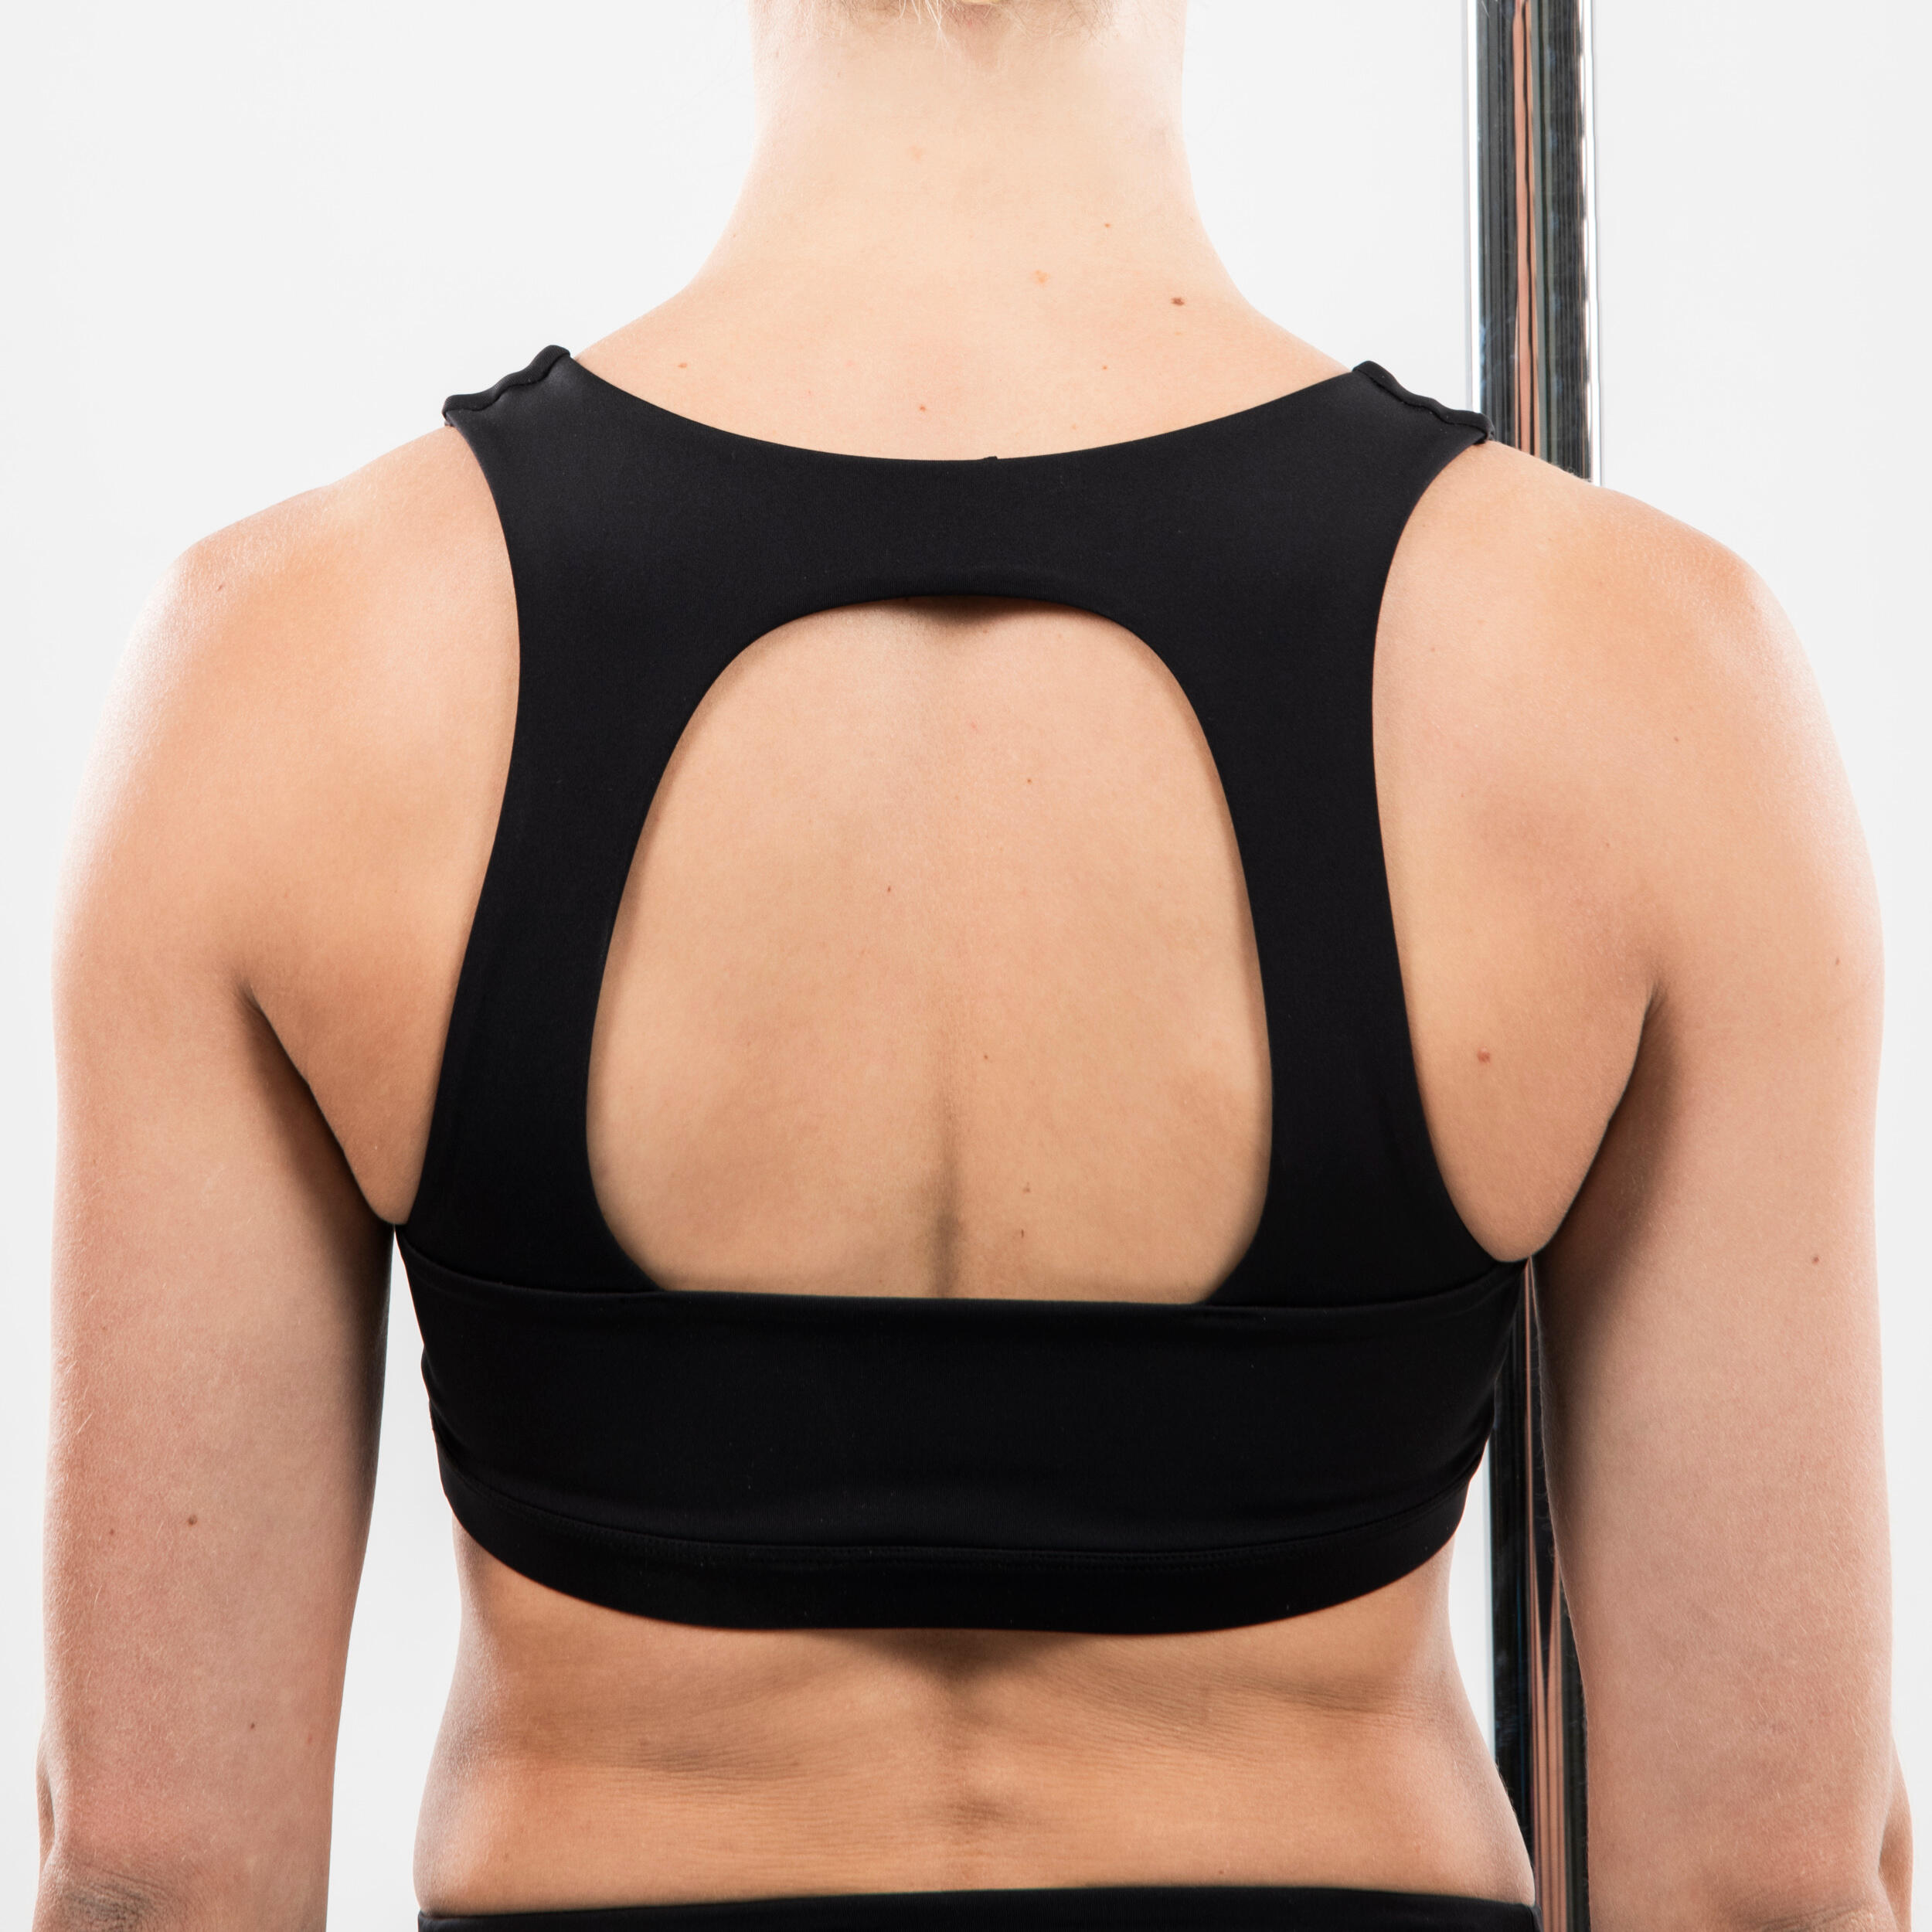 Women's Bi-Material Pole Dancing Bra with Detachable Pad - Black 4/5